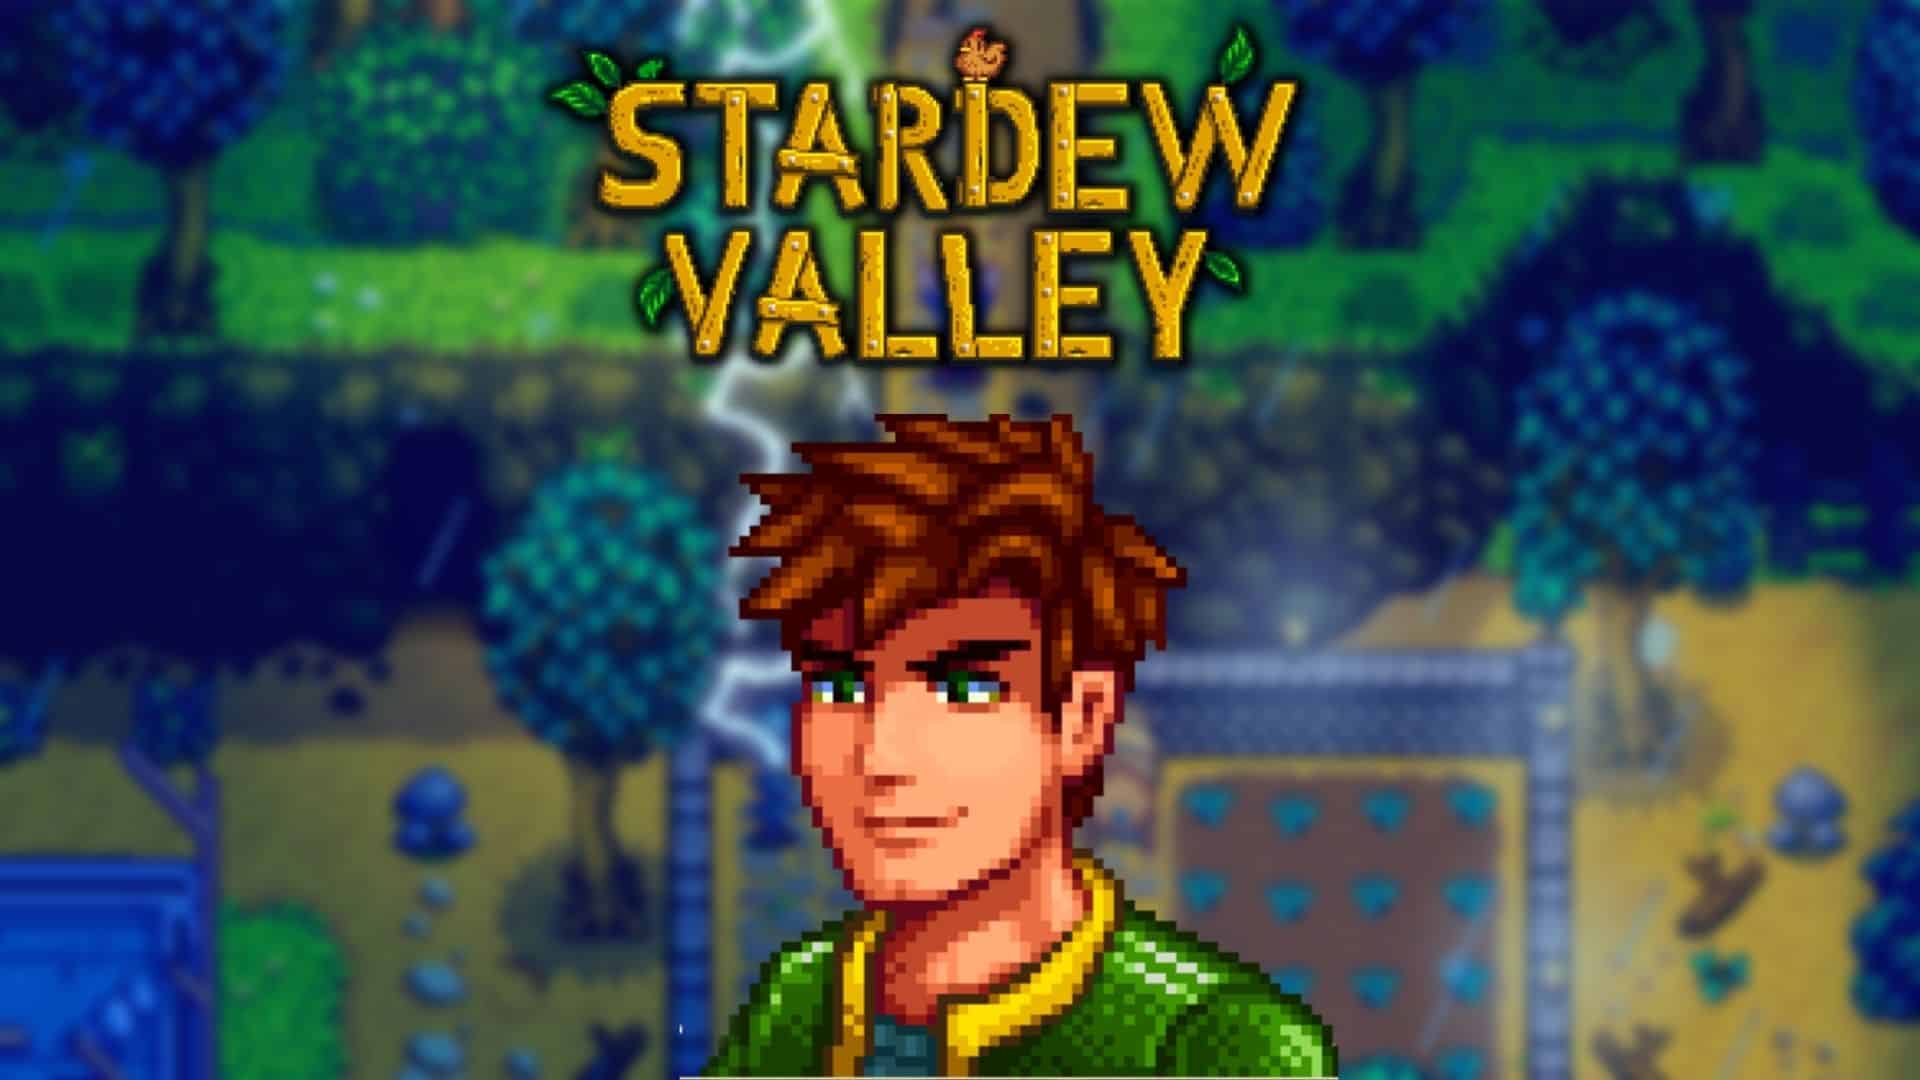 stardew valley alex profile picture